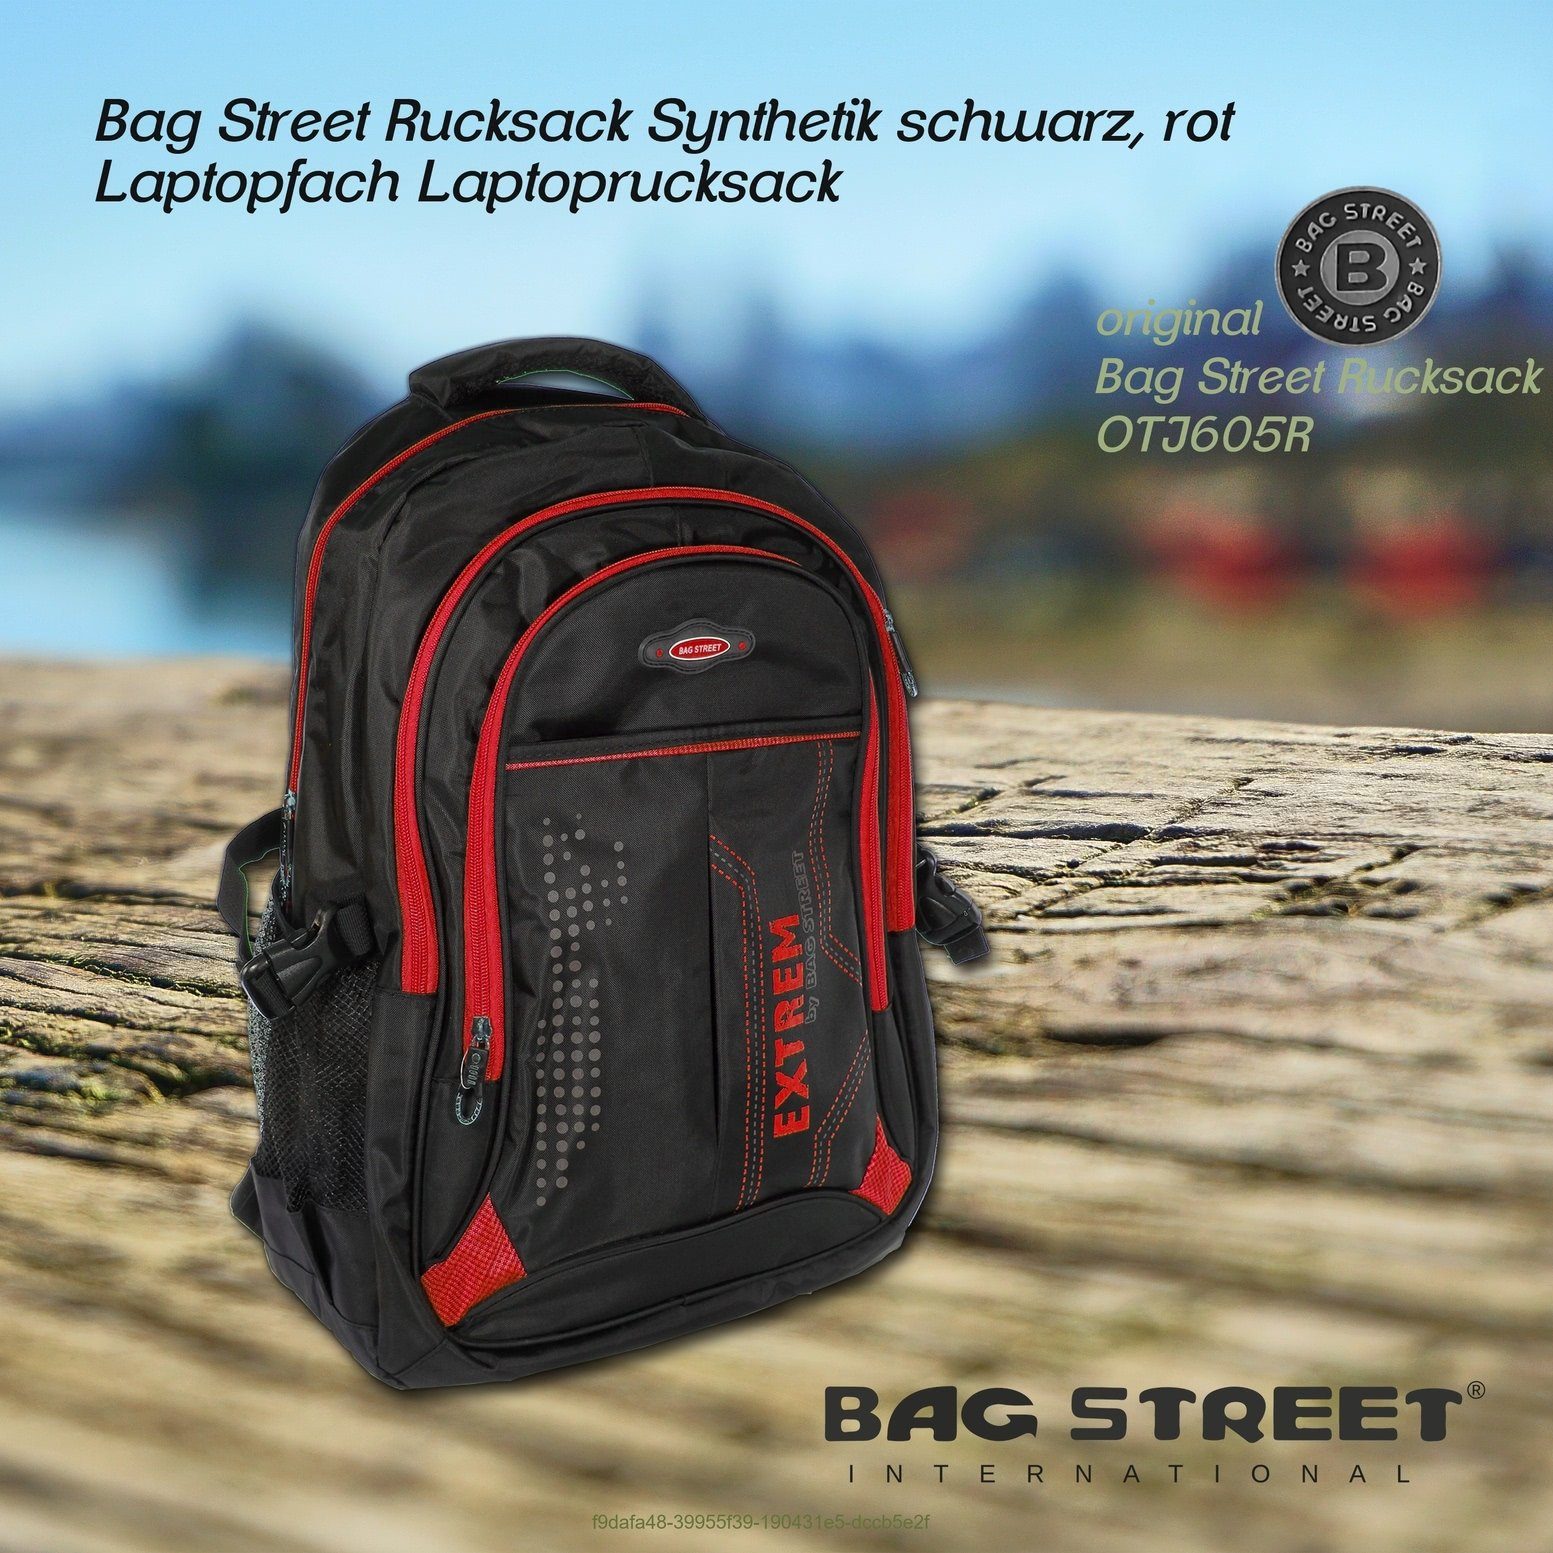 Bag Herren ca. Street rot ca. 30cm Sportrucksack BAG Sportrucksack, Businessrucksack Damen x STREET Synthetik, Sporttasche, schwarz,